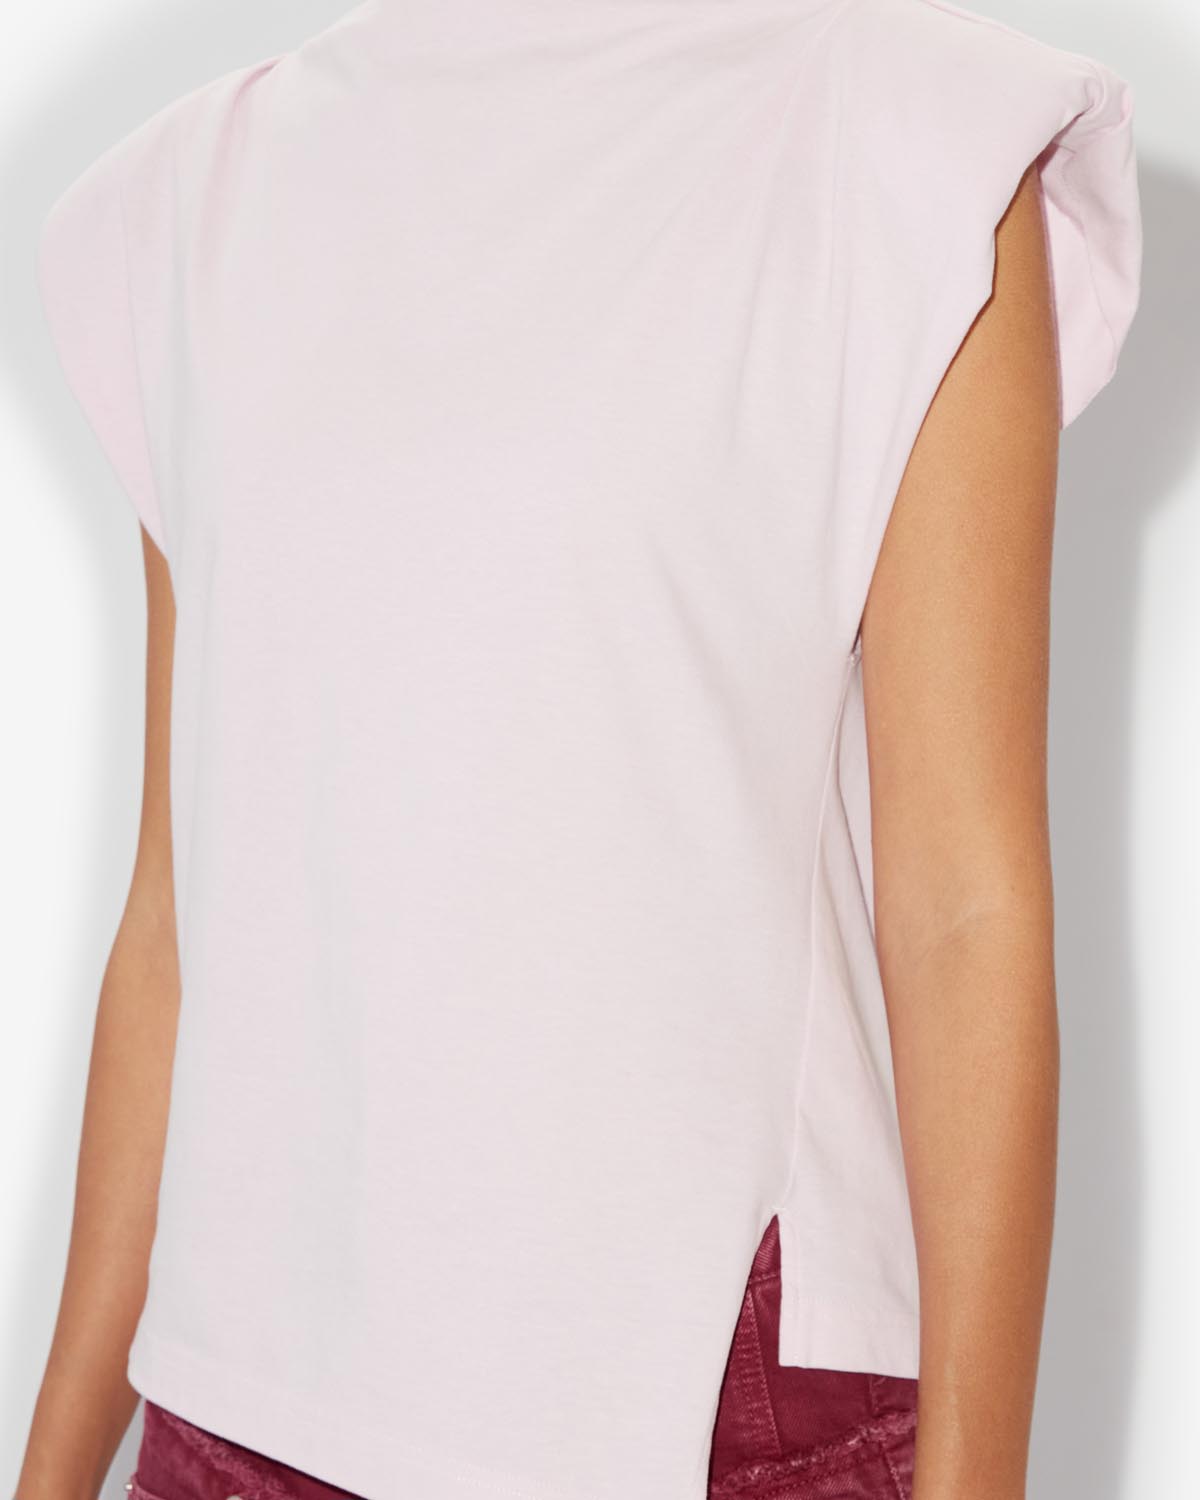 Sebani ティーシャツ Woman Light pink 3